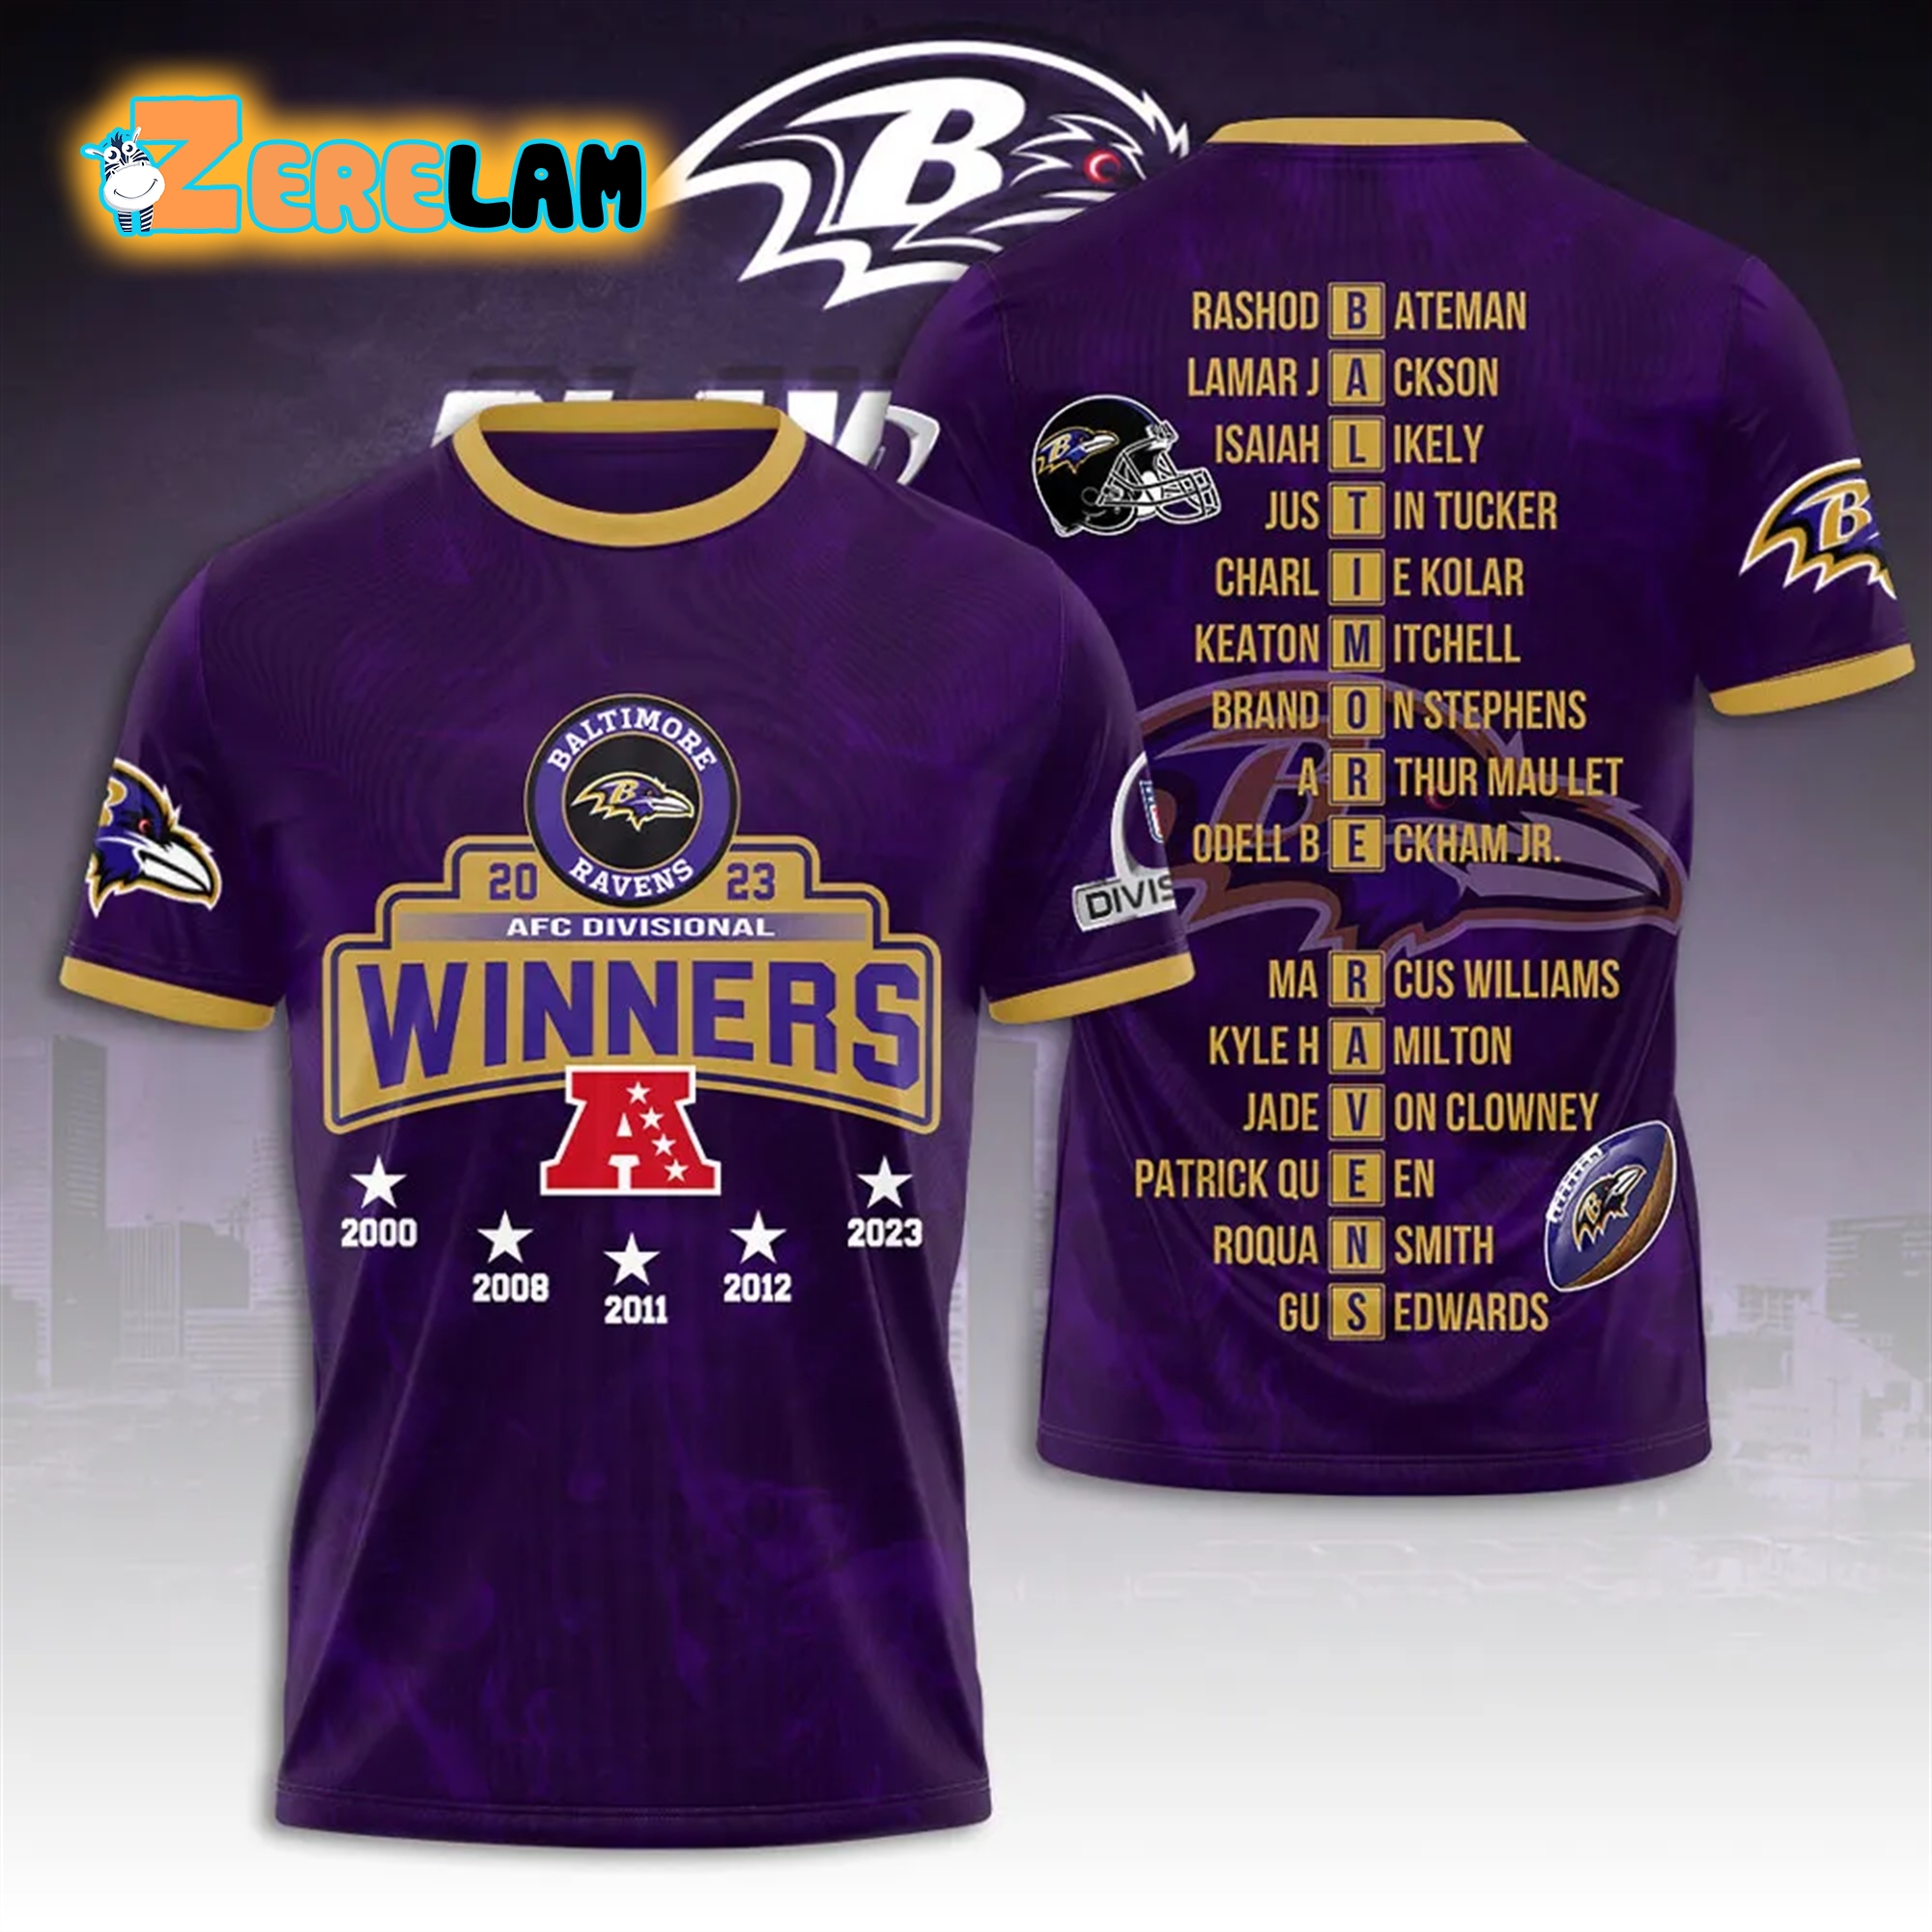 Ravens 2023 AFC Divisional Winners Shirt - Zerelam